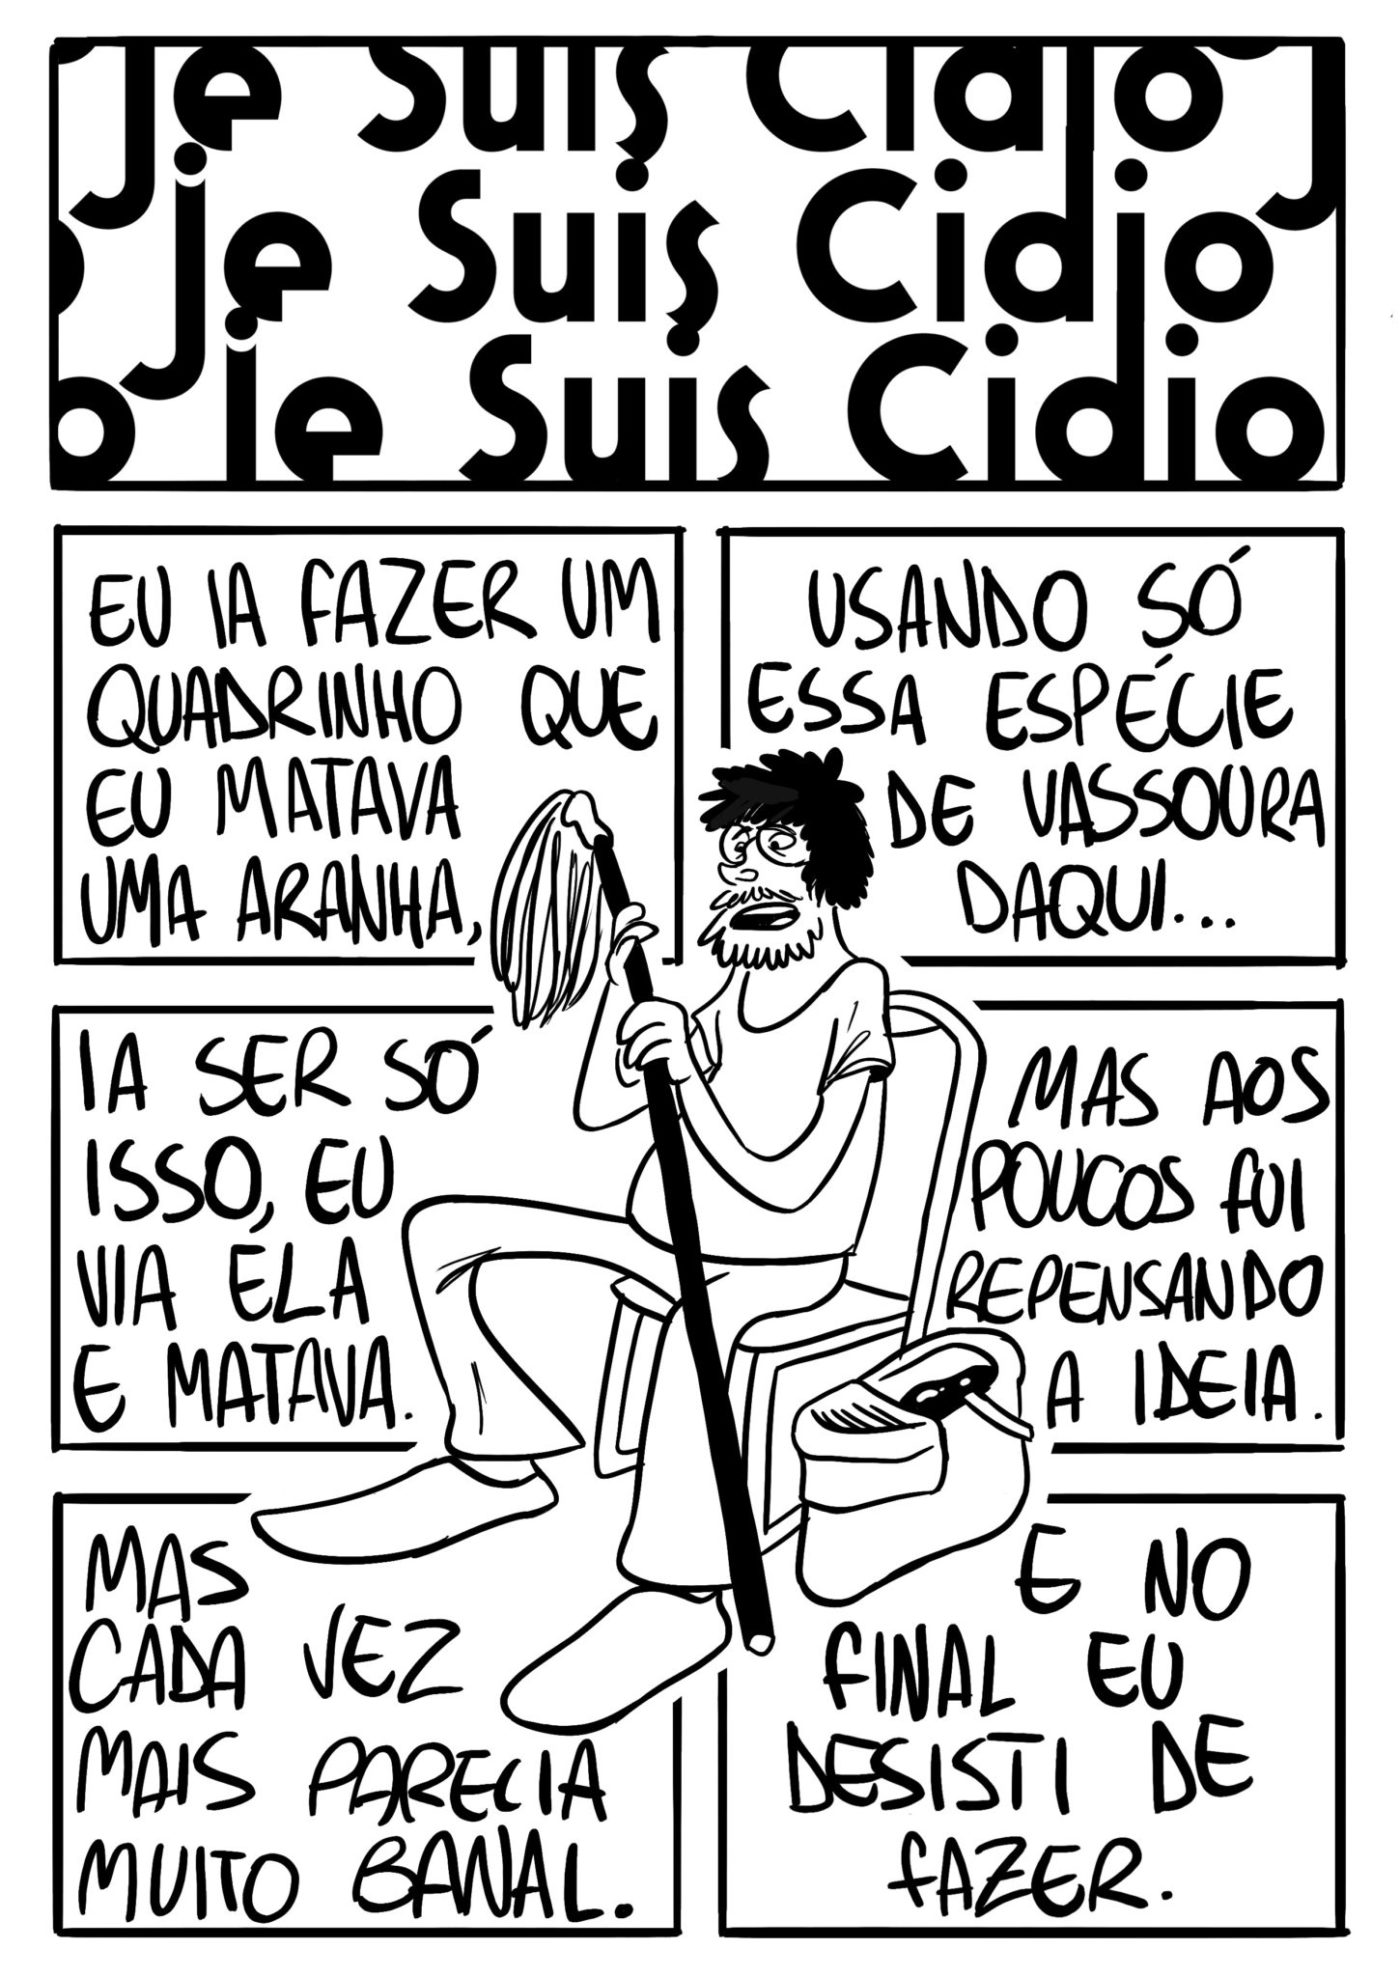 Je Suis Cídio #17, por João B. Godoi